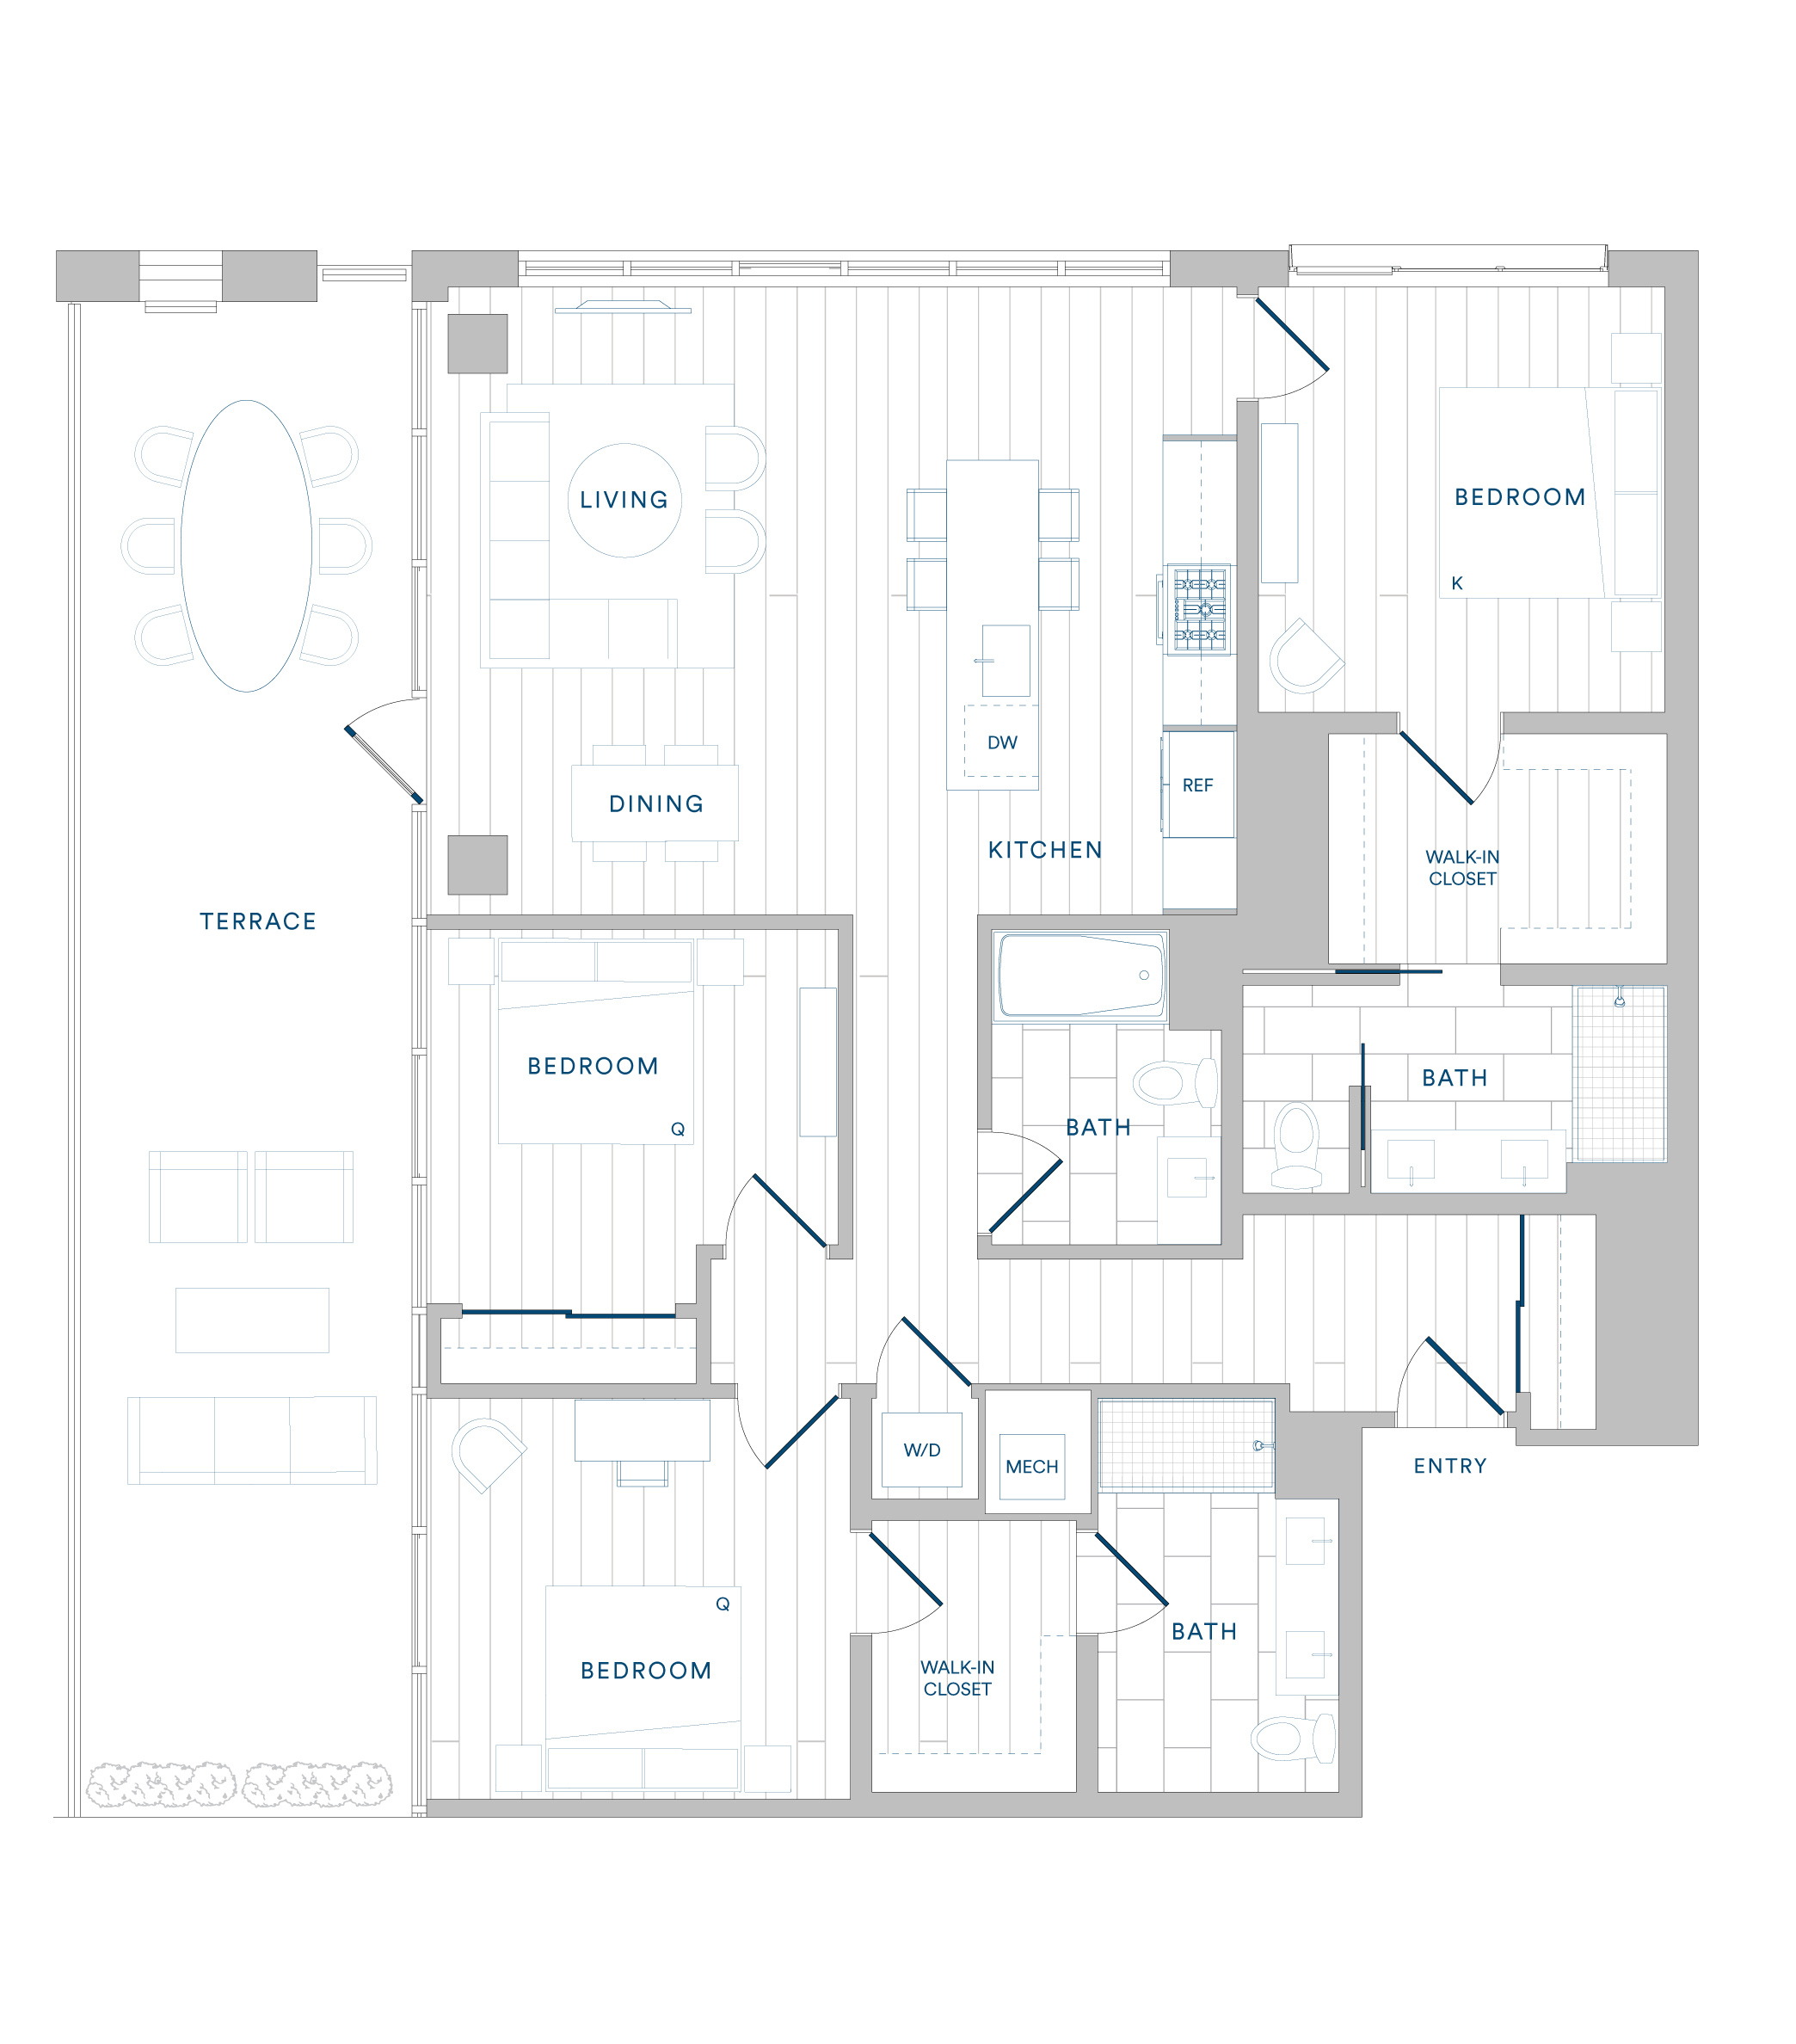 Floorplan for Apartment #1303, 3 bedroom unit at Margarite